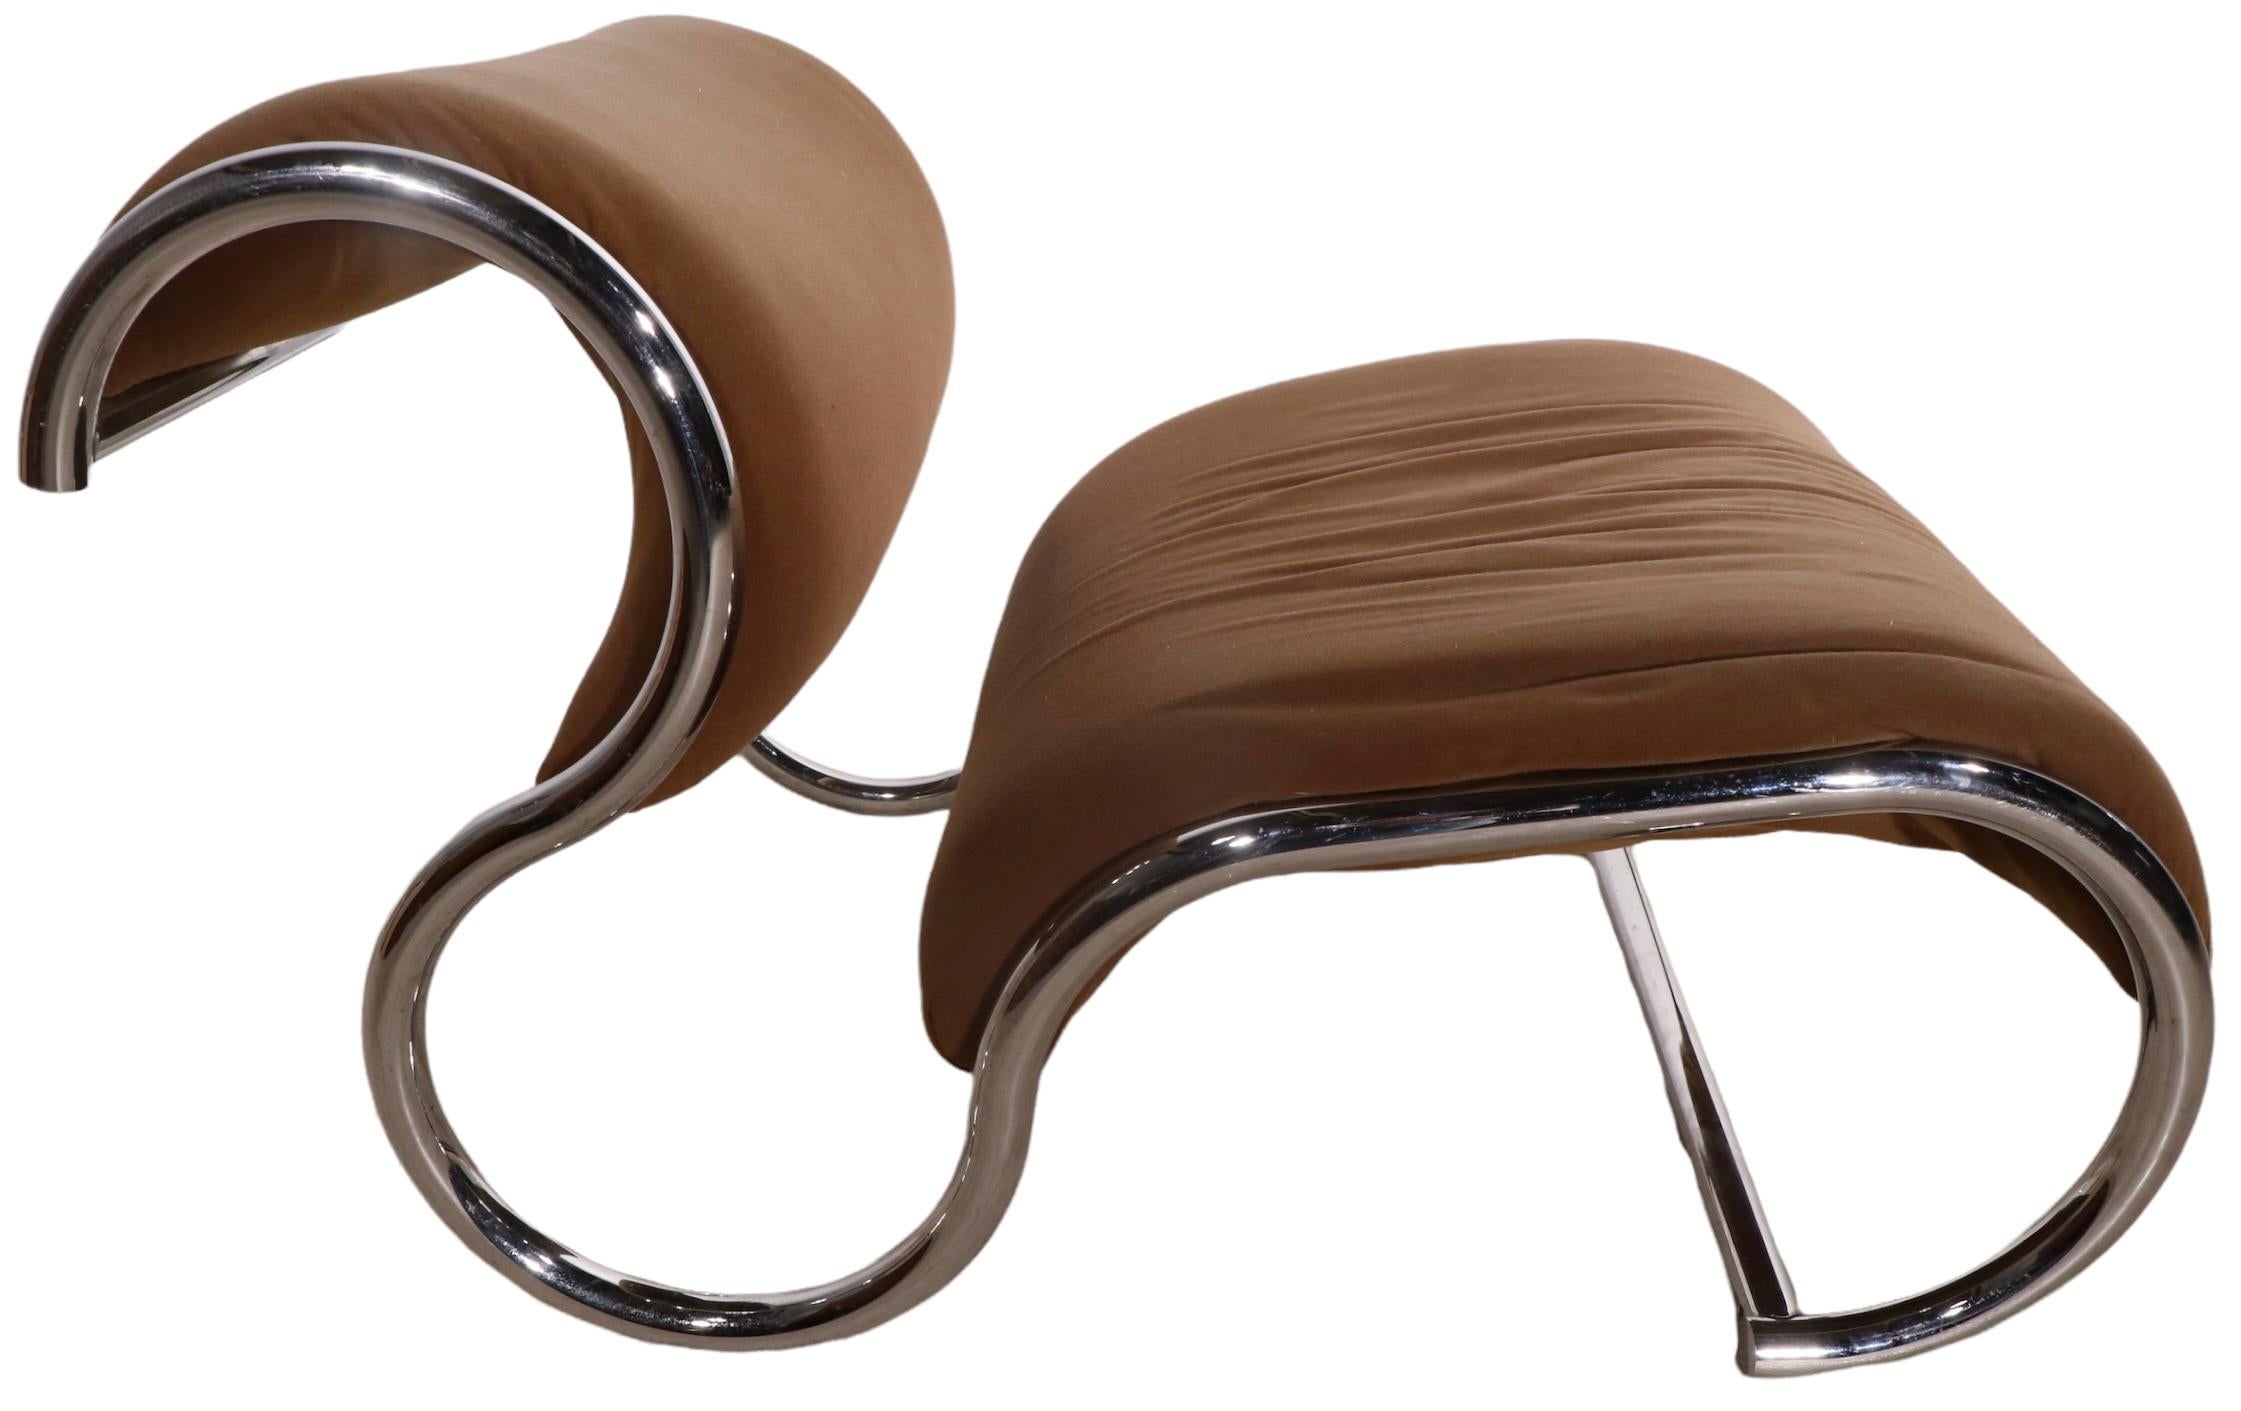  Post Modern Tubular Chrome Lounge Chair Chaise Lounge Ca. 1970's  For Sale 1